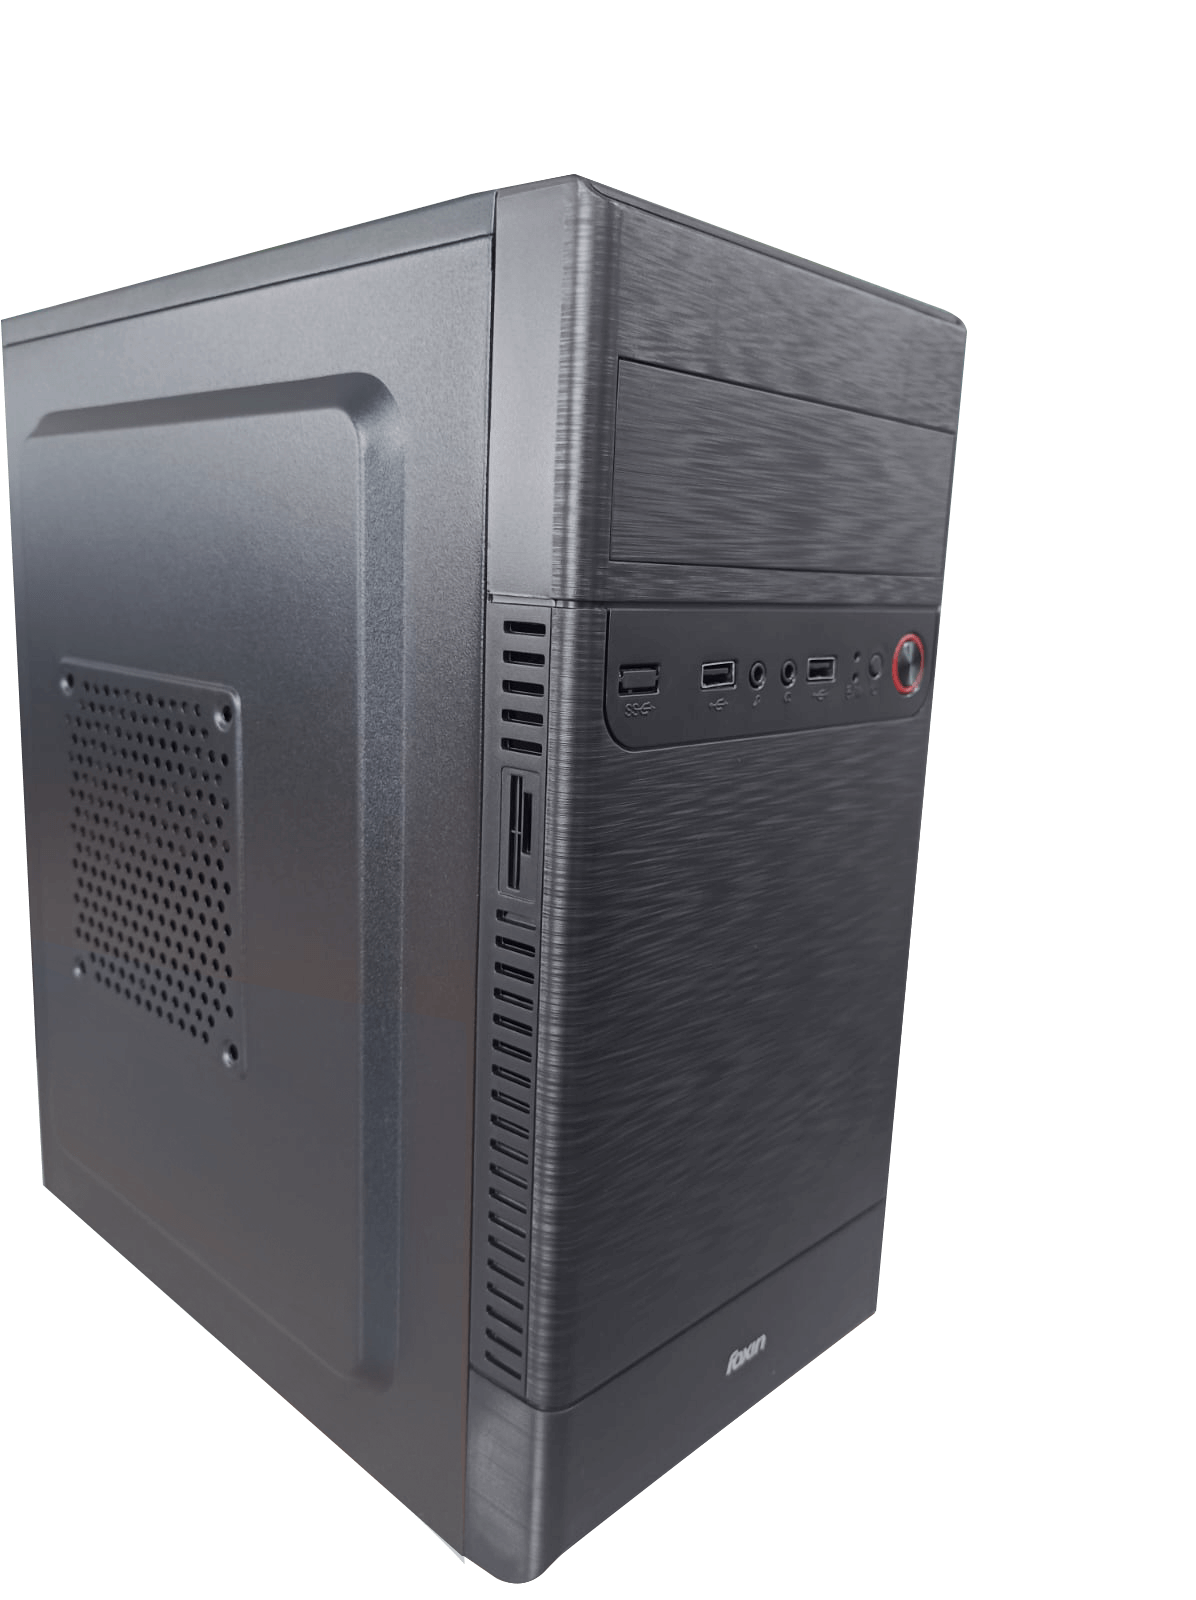 Foxin XING Desktop Computer Case/PC Cabinet - with Steel Metal Body | All Micro-ATX / Mini-ITX Compatible | Metallic Black